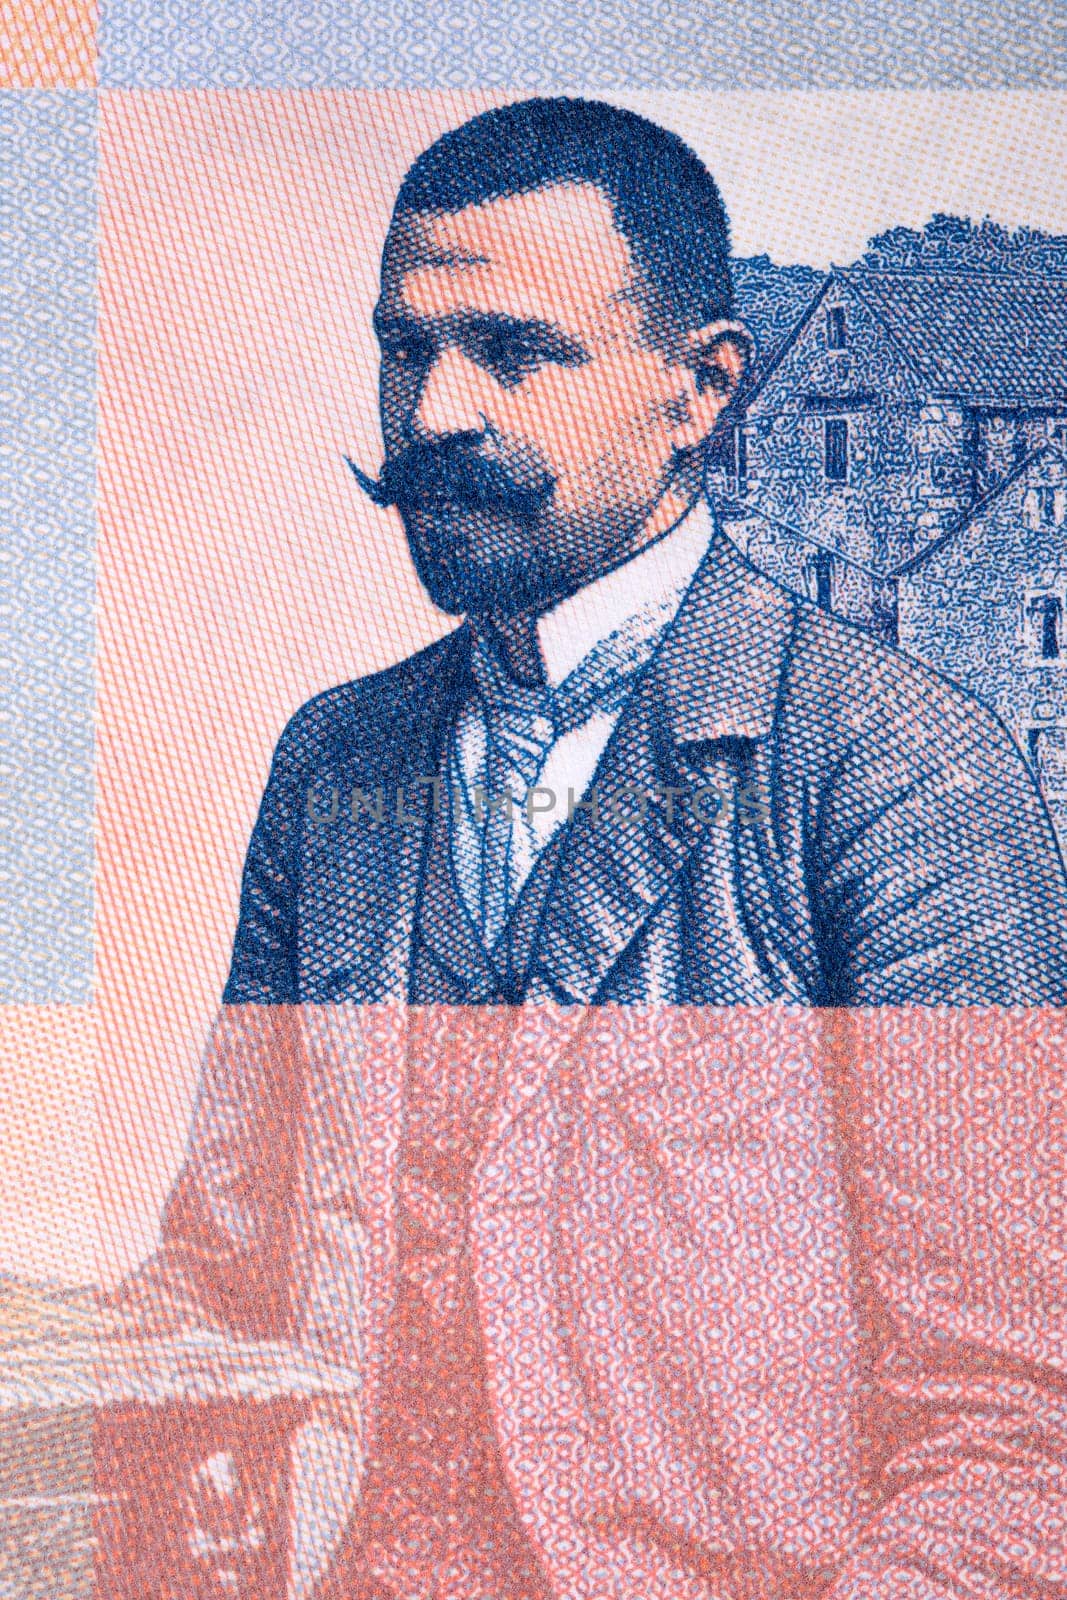 Matej Bencur a portrait from money by johan10